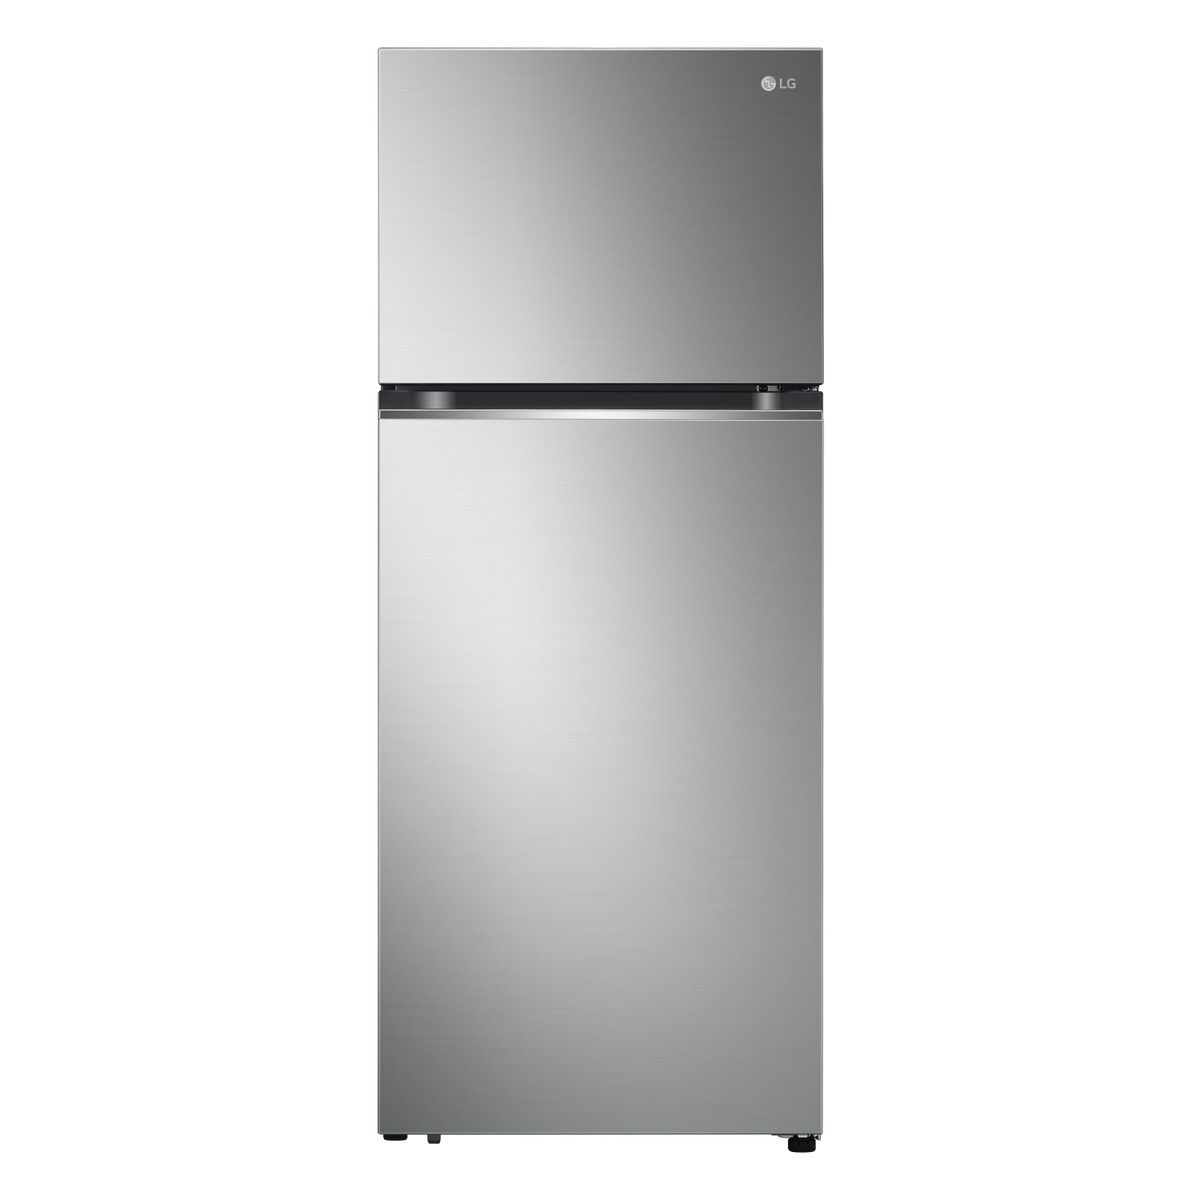 Geladeira Refrigerador Lg 395L Frost Free Top Freezer Smart Gn-B392plm2 - Inox - 220 Volts